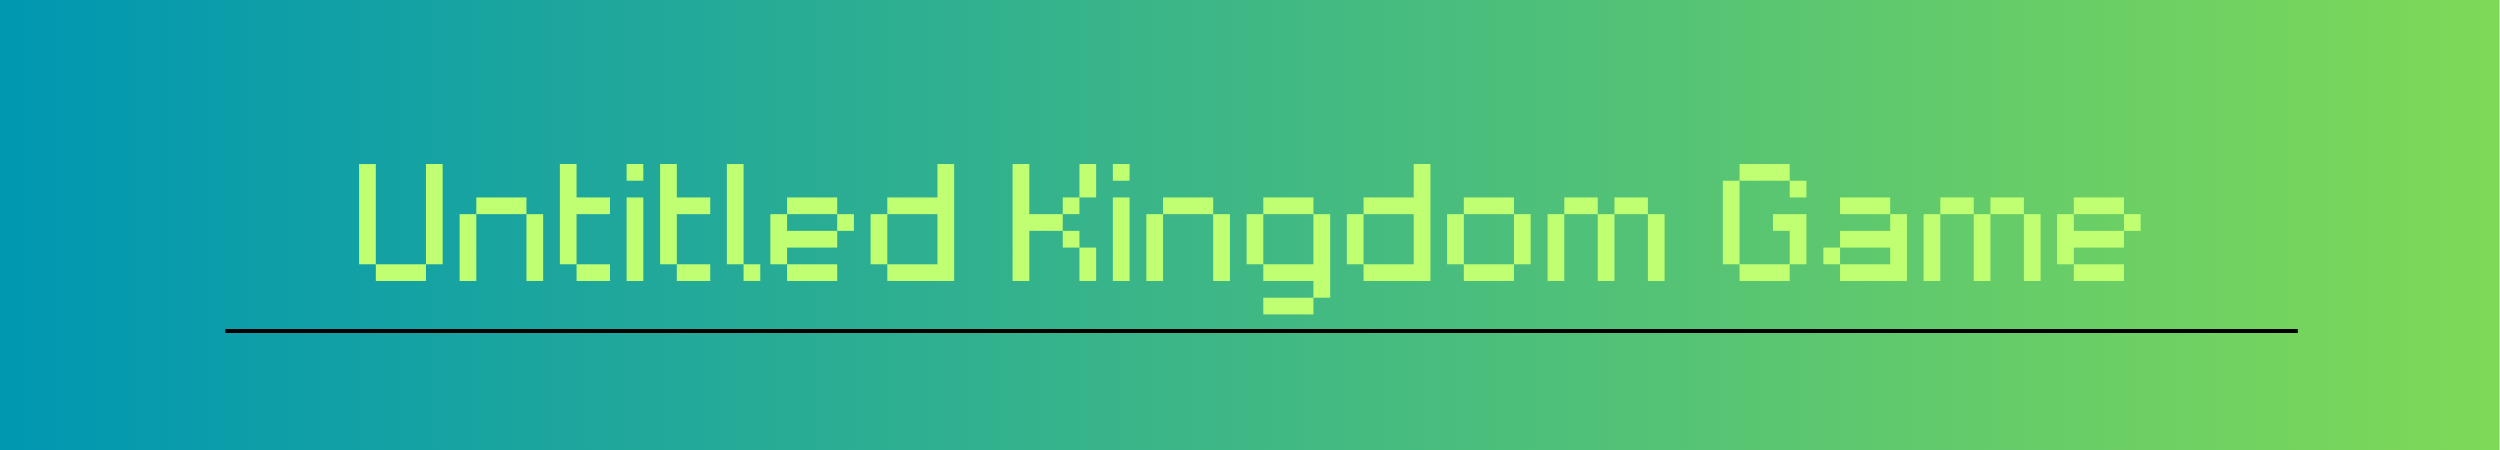 Untitled Kingdom Game